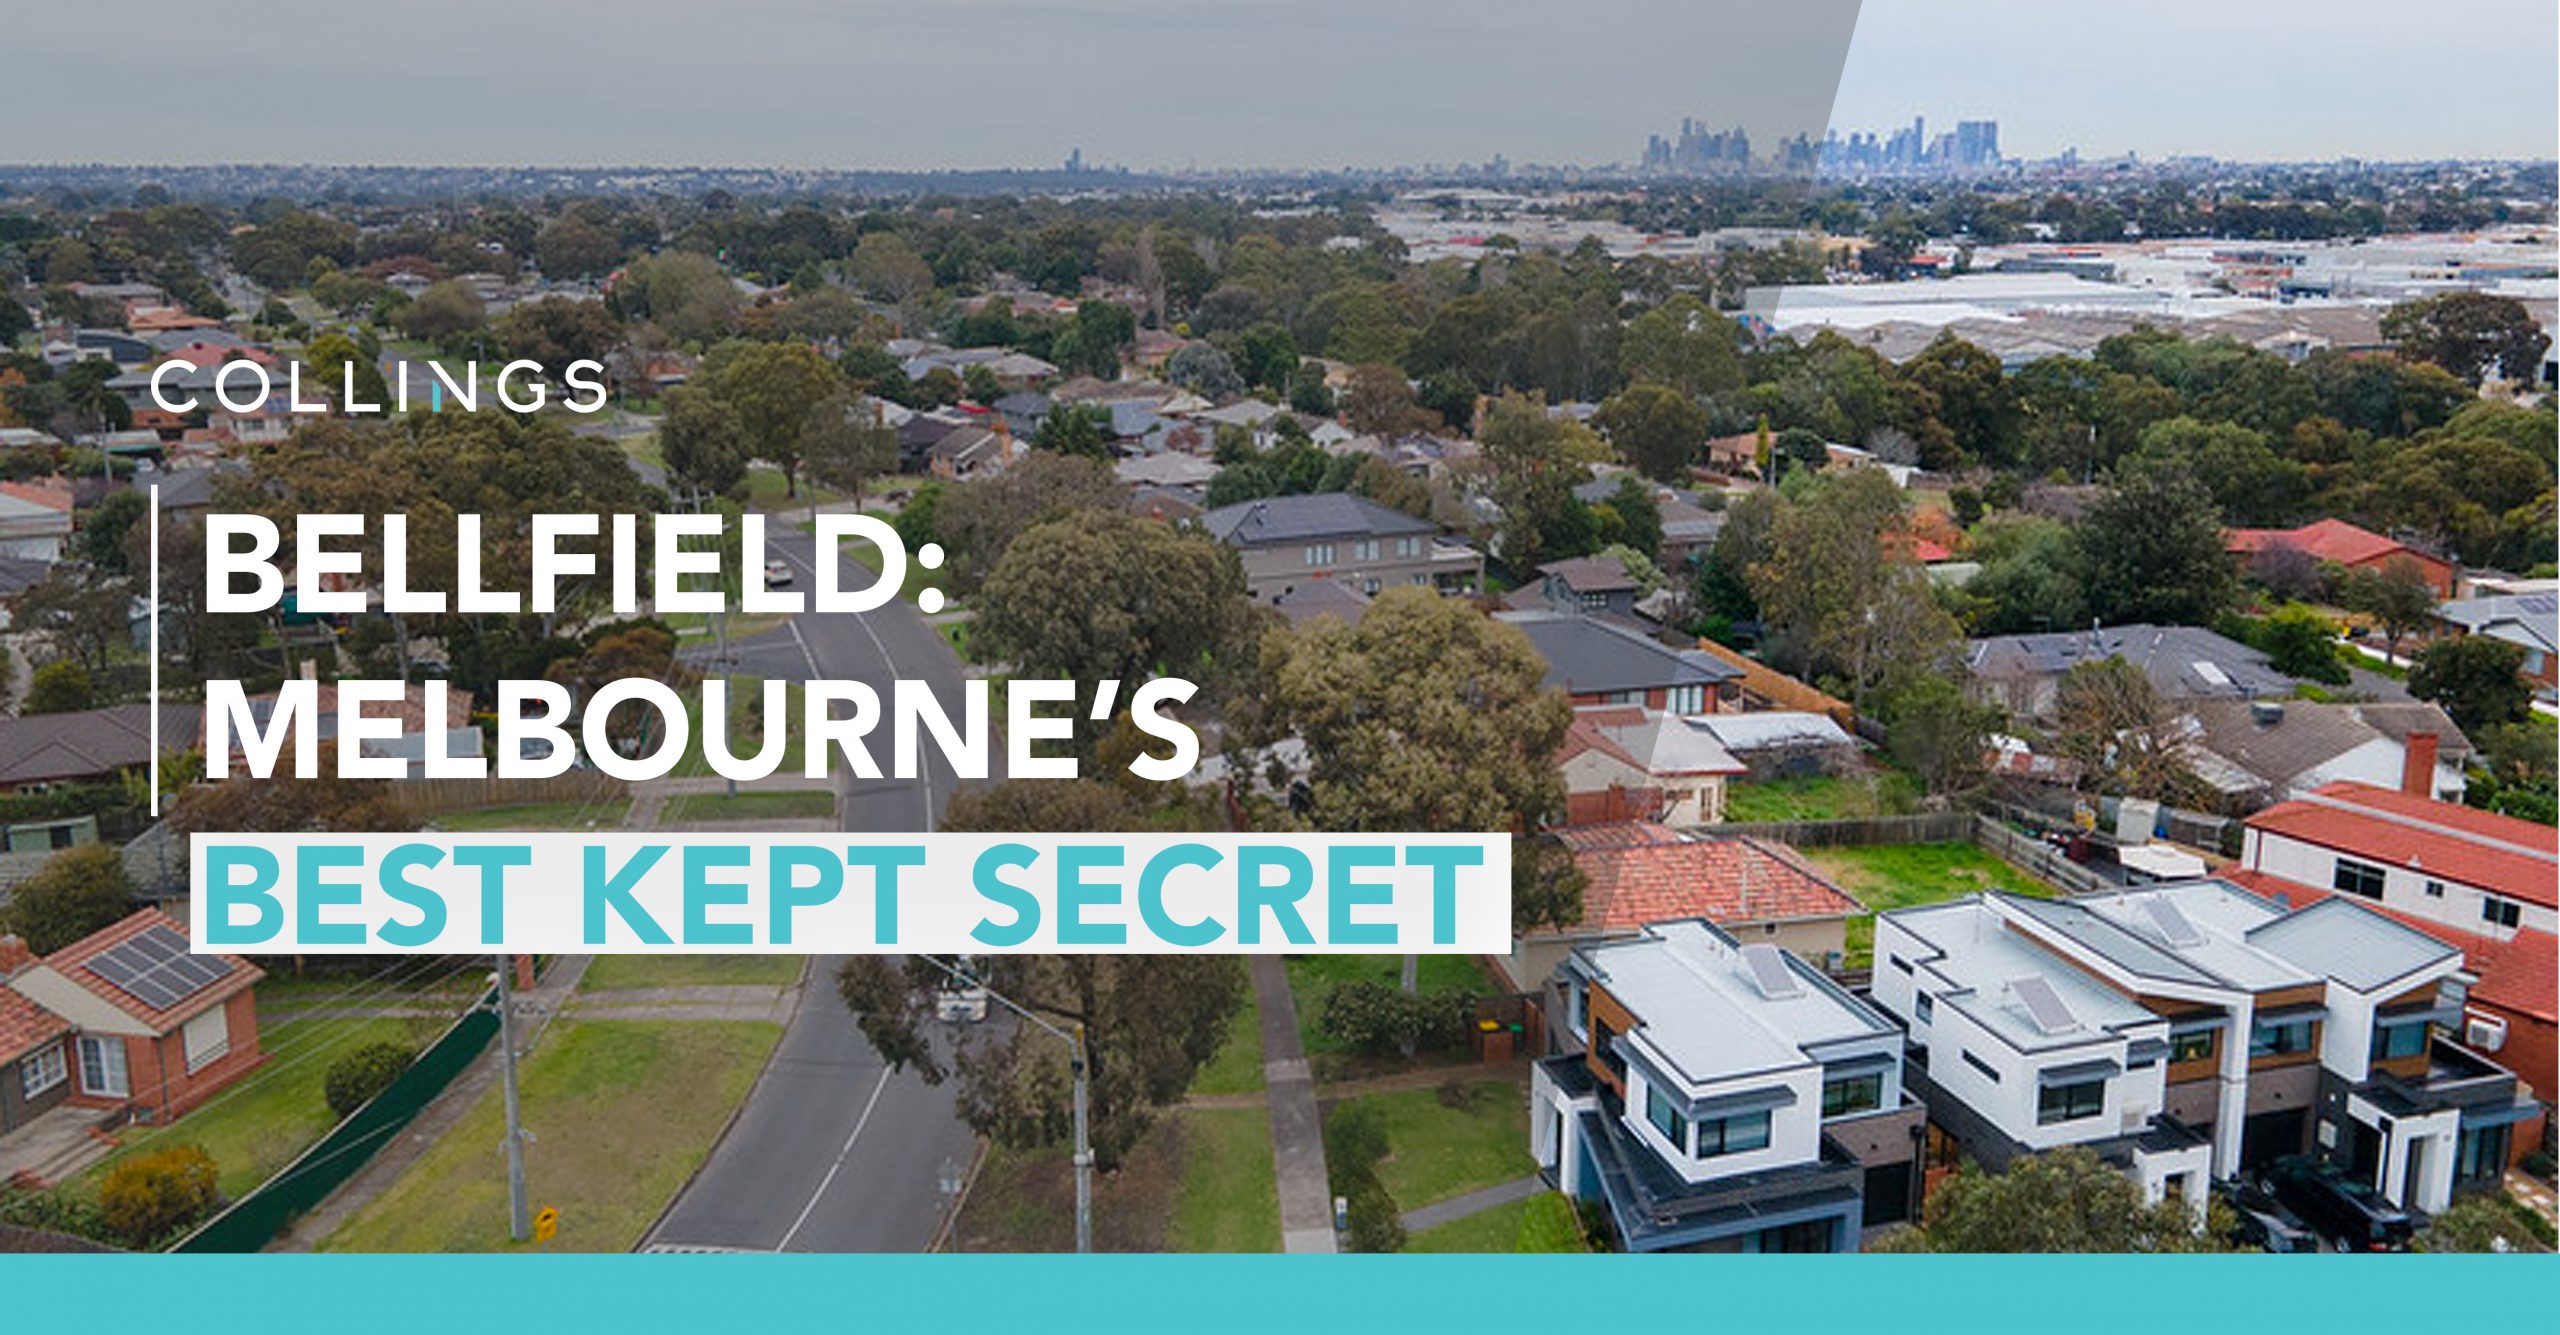 Bellfield: Melbourne's Best Kept Secret